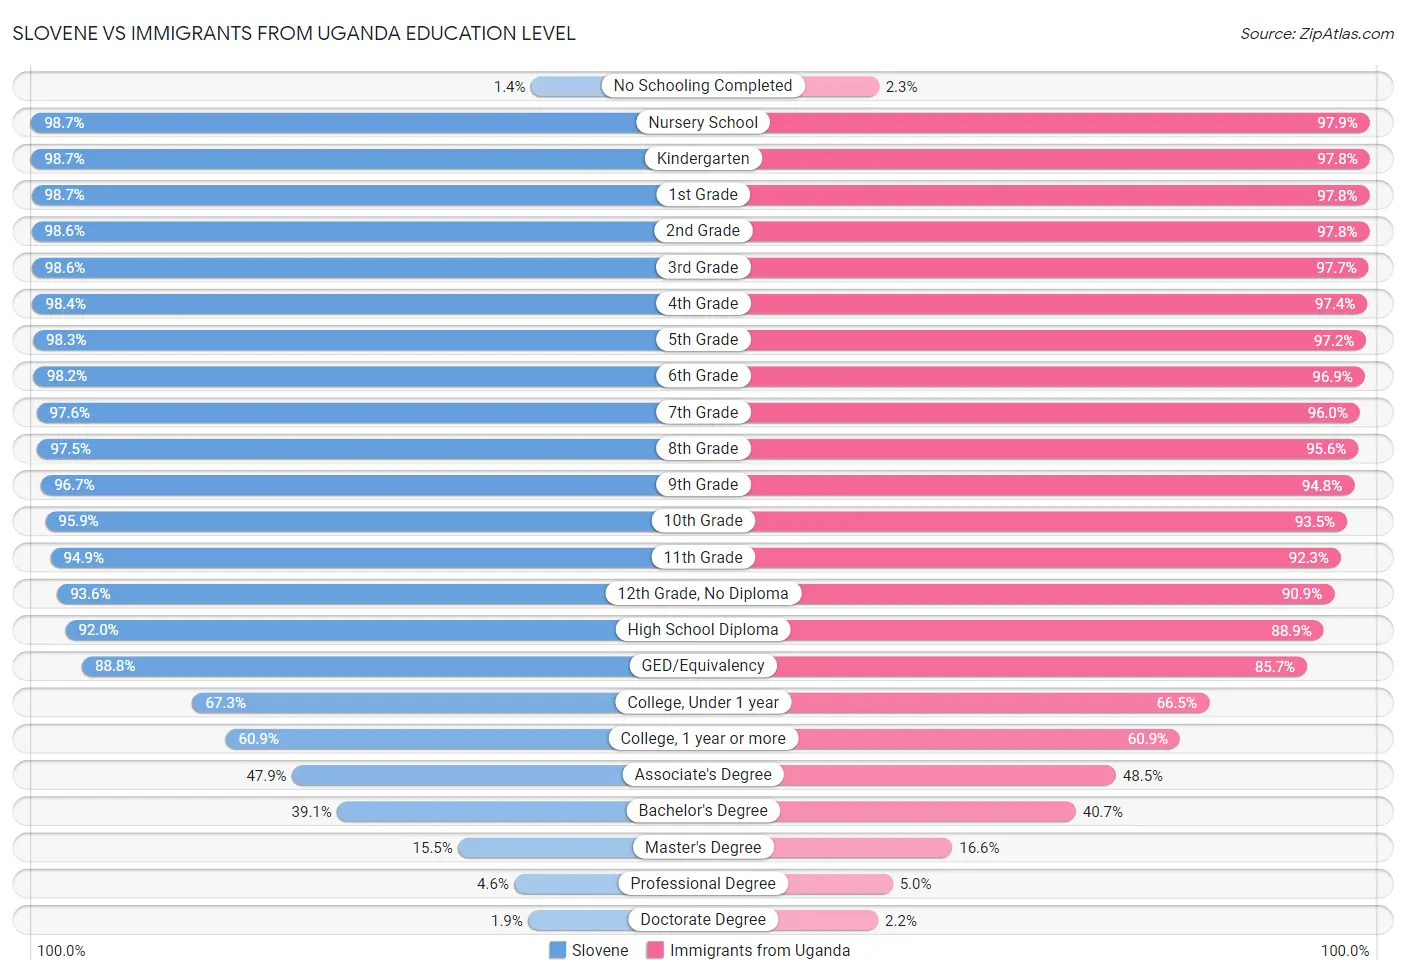 Slovene vs Immigrants from Uganda Education Level